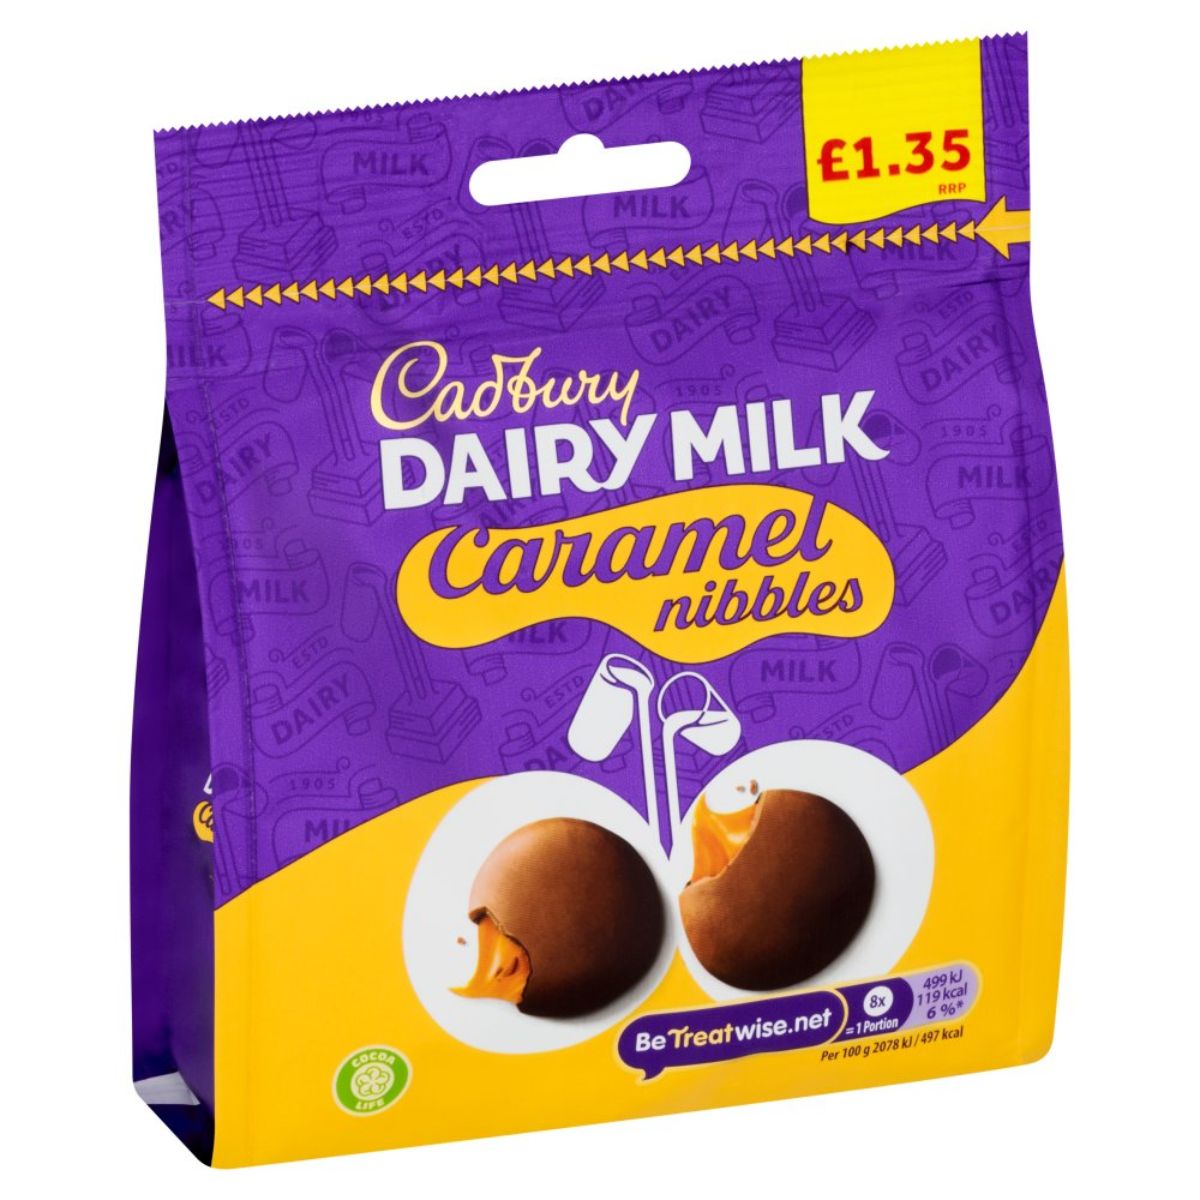 Cadbury Dairy Milk Caramel Nibbles.